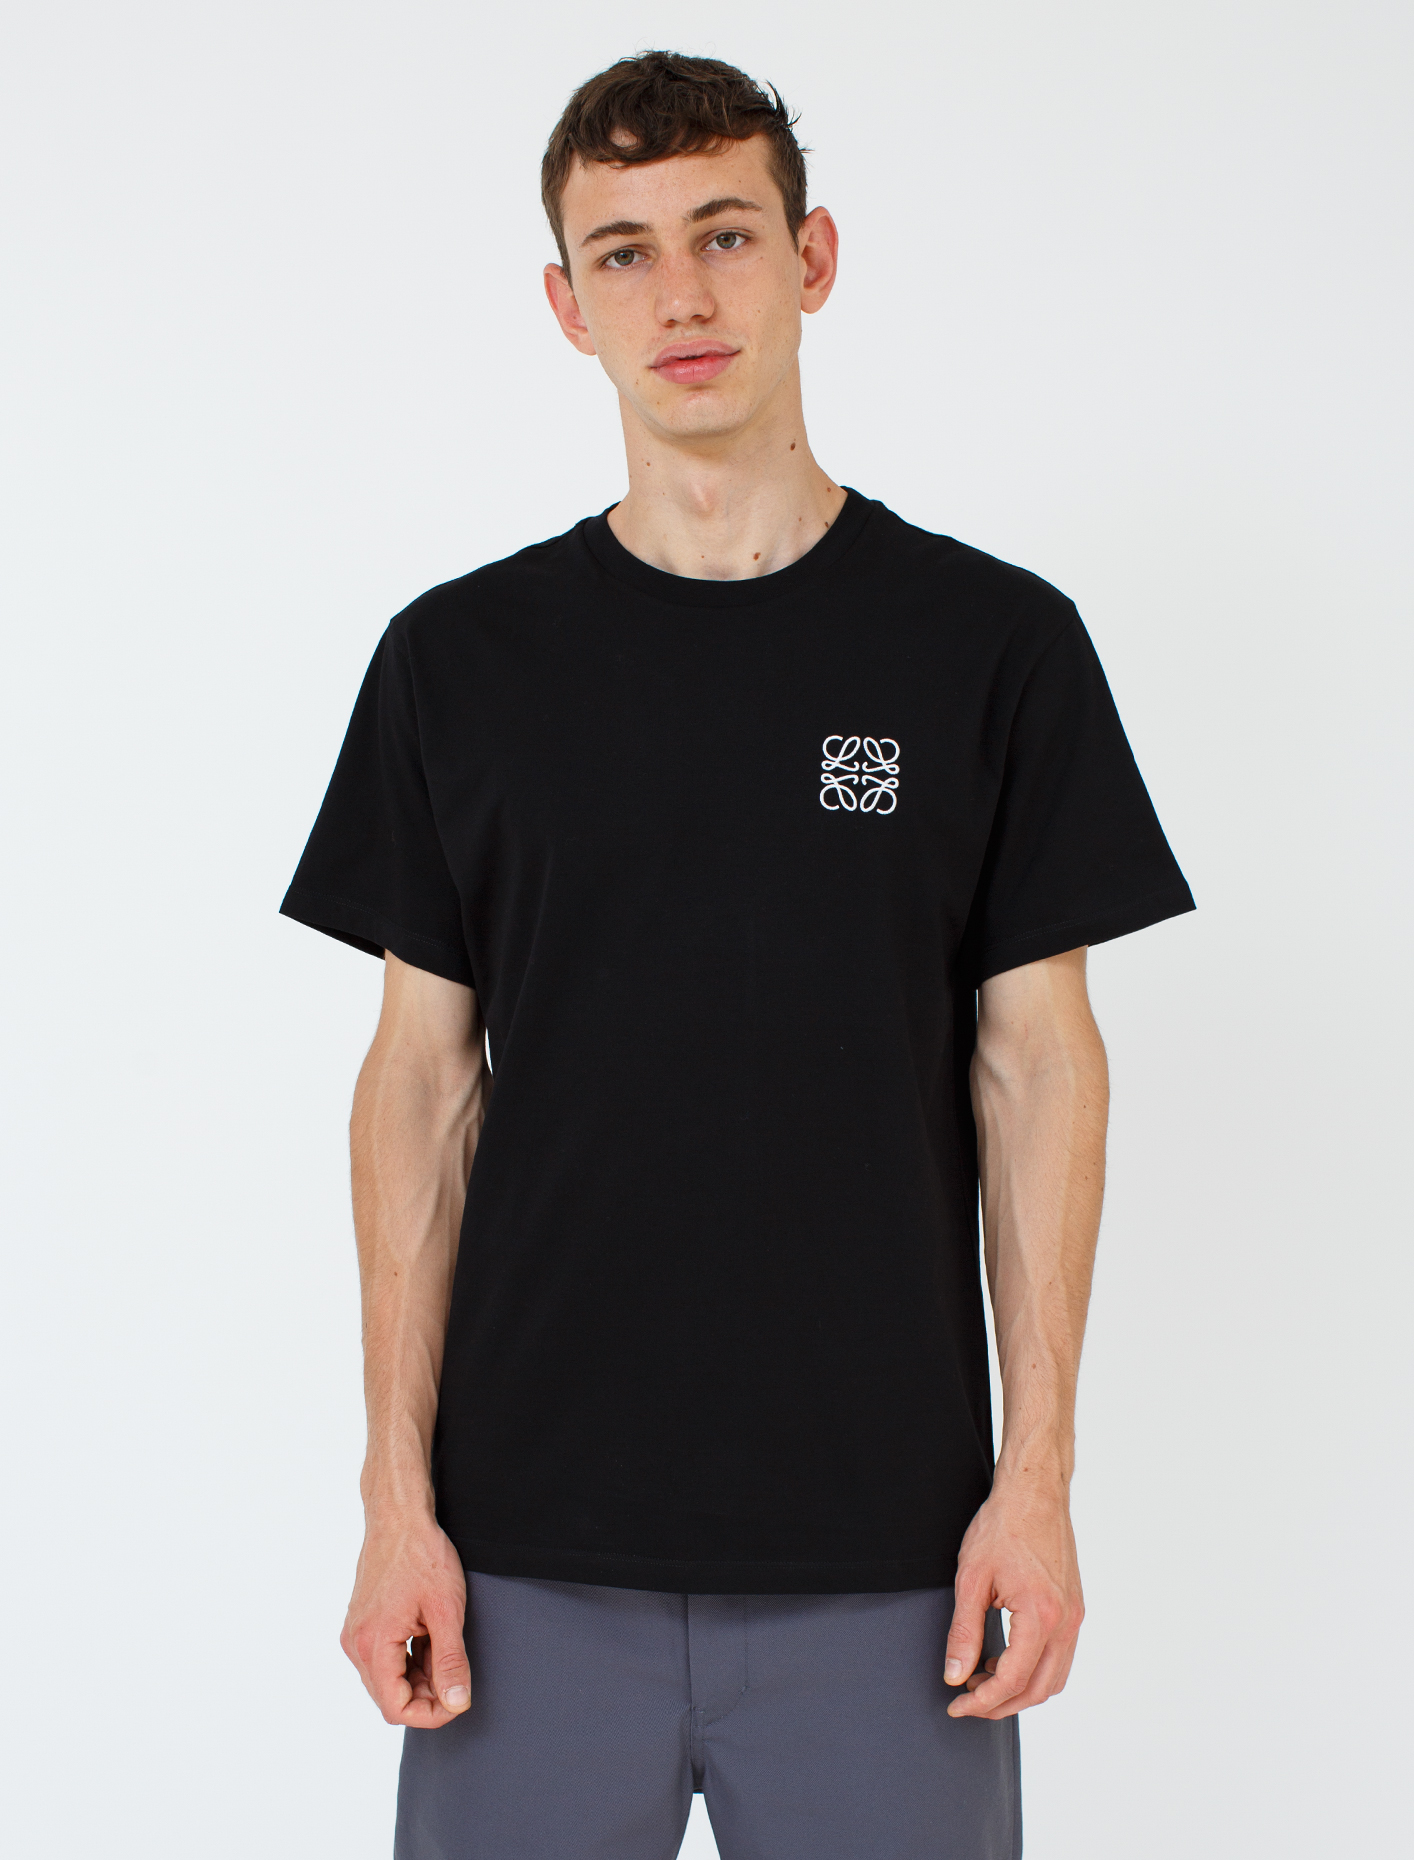 Loewe Anagram T-Shirt | Voo Store Berlin | Worldwide Shipping